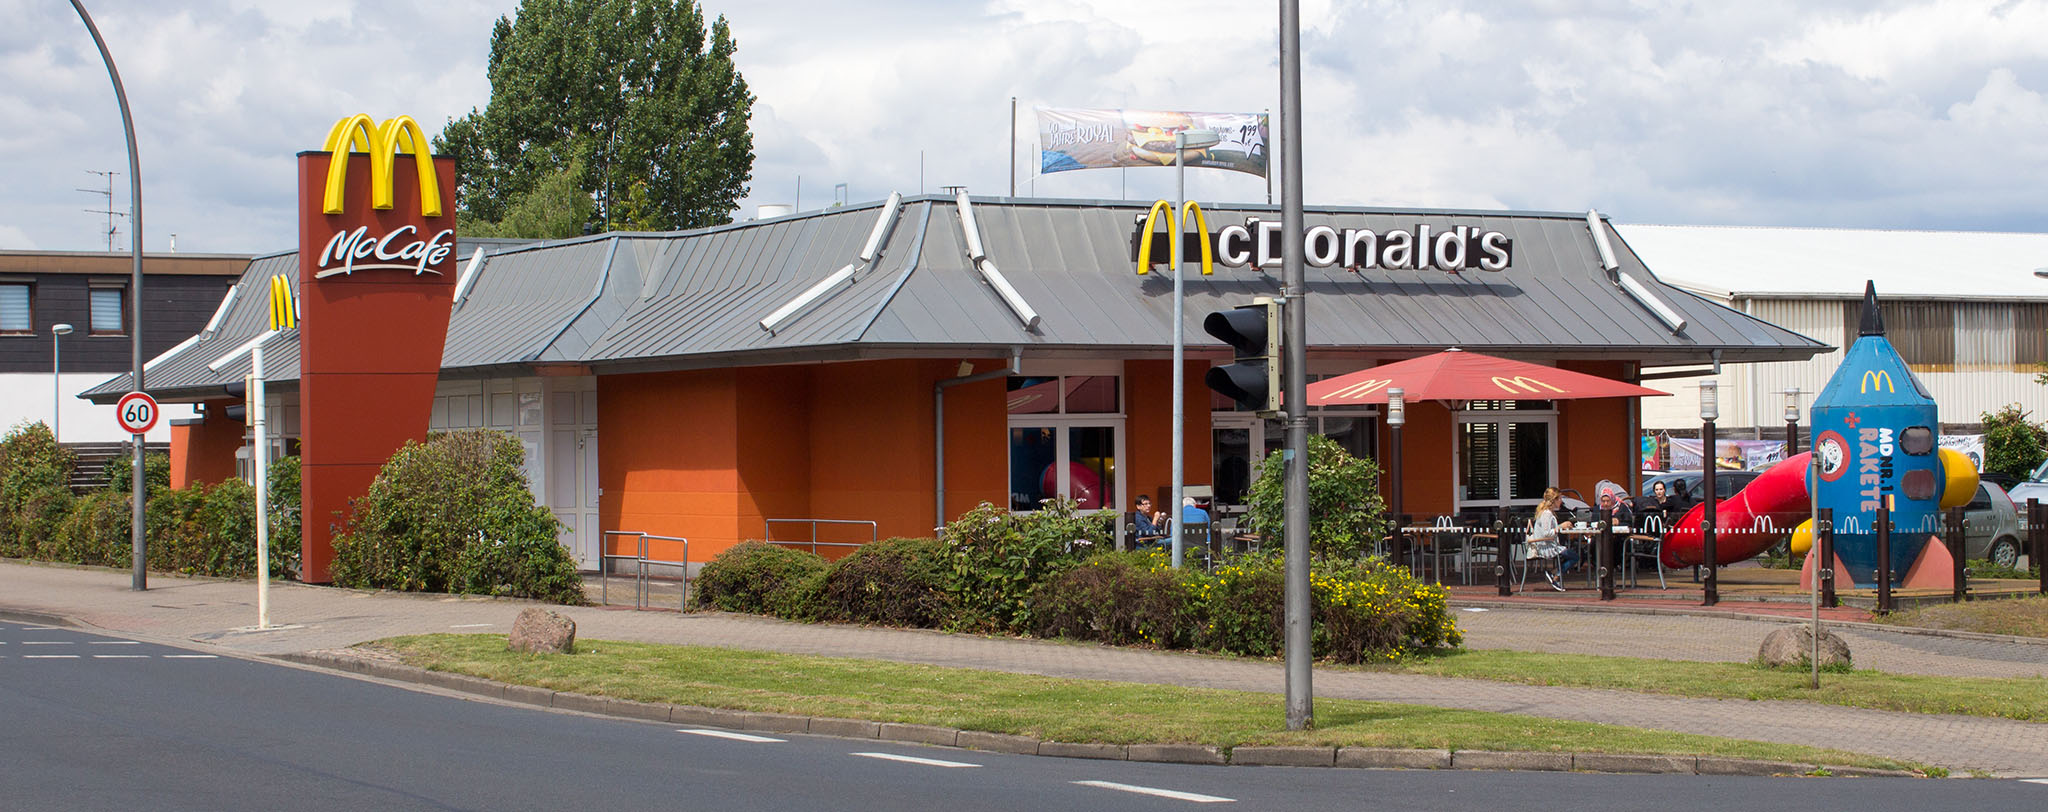 Das McDonald’s-Restaurant in Salzgitter (Konrad-Adenauer-Straße)